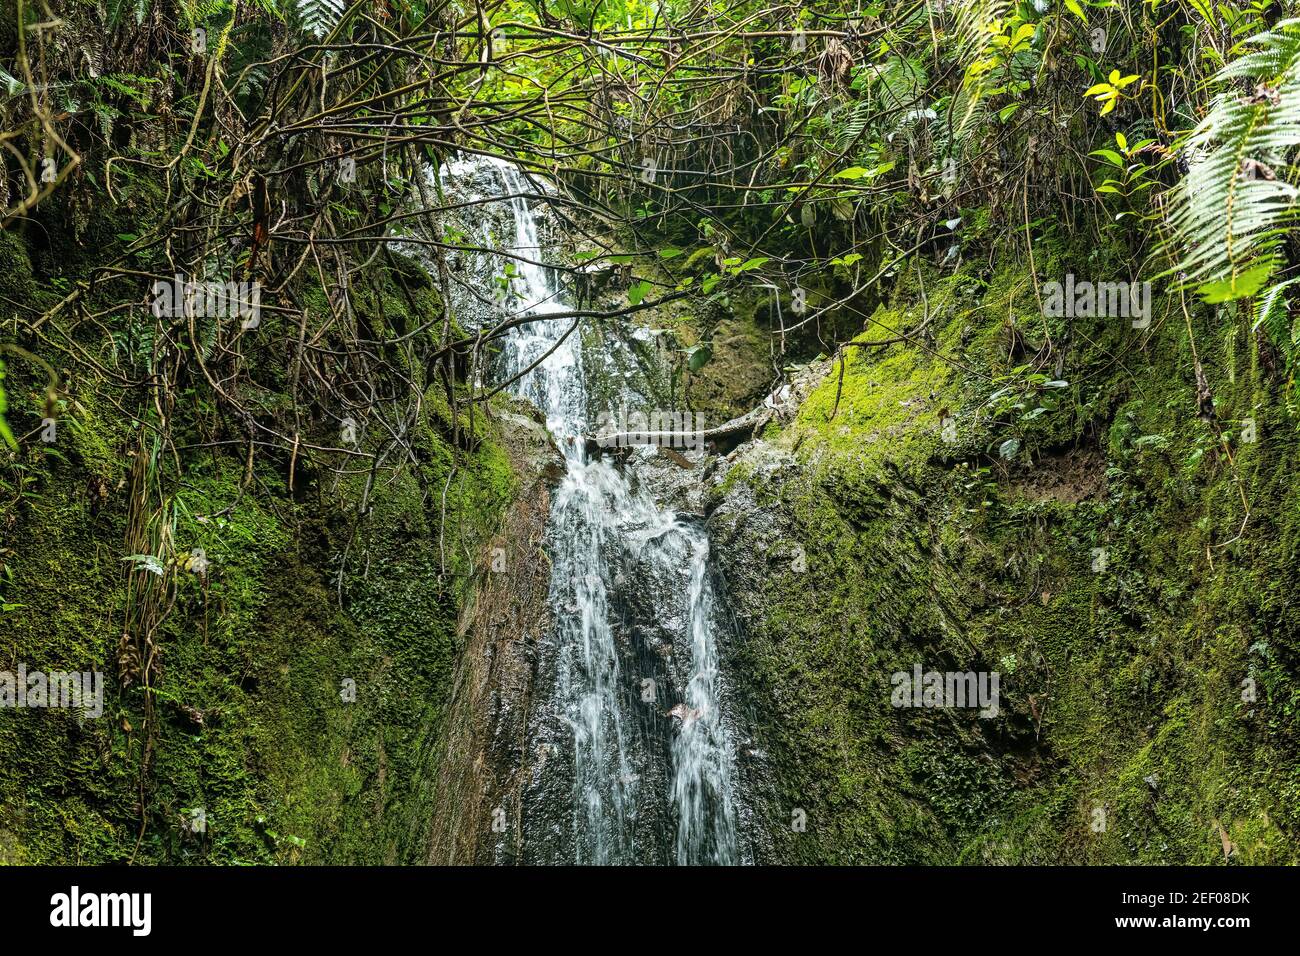 One of the Los Cuchos waterfalls by the village of Atahualpa near Quito, Ecuador. Stock Photo